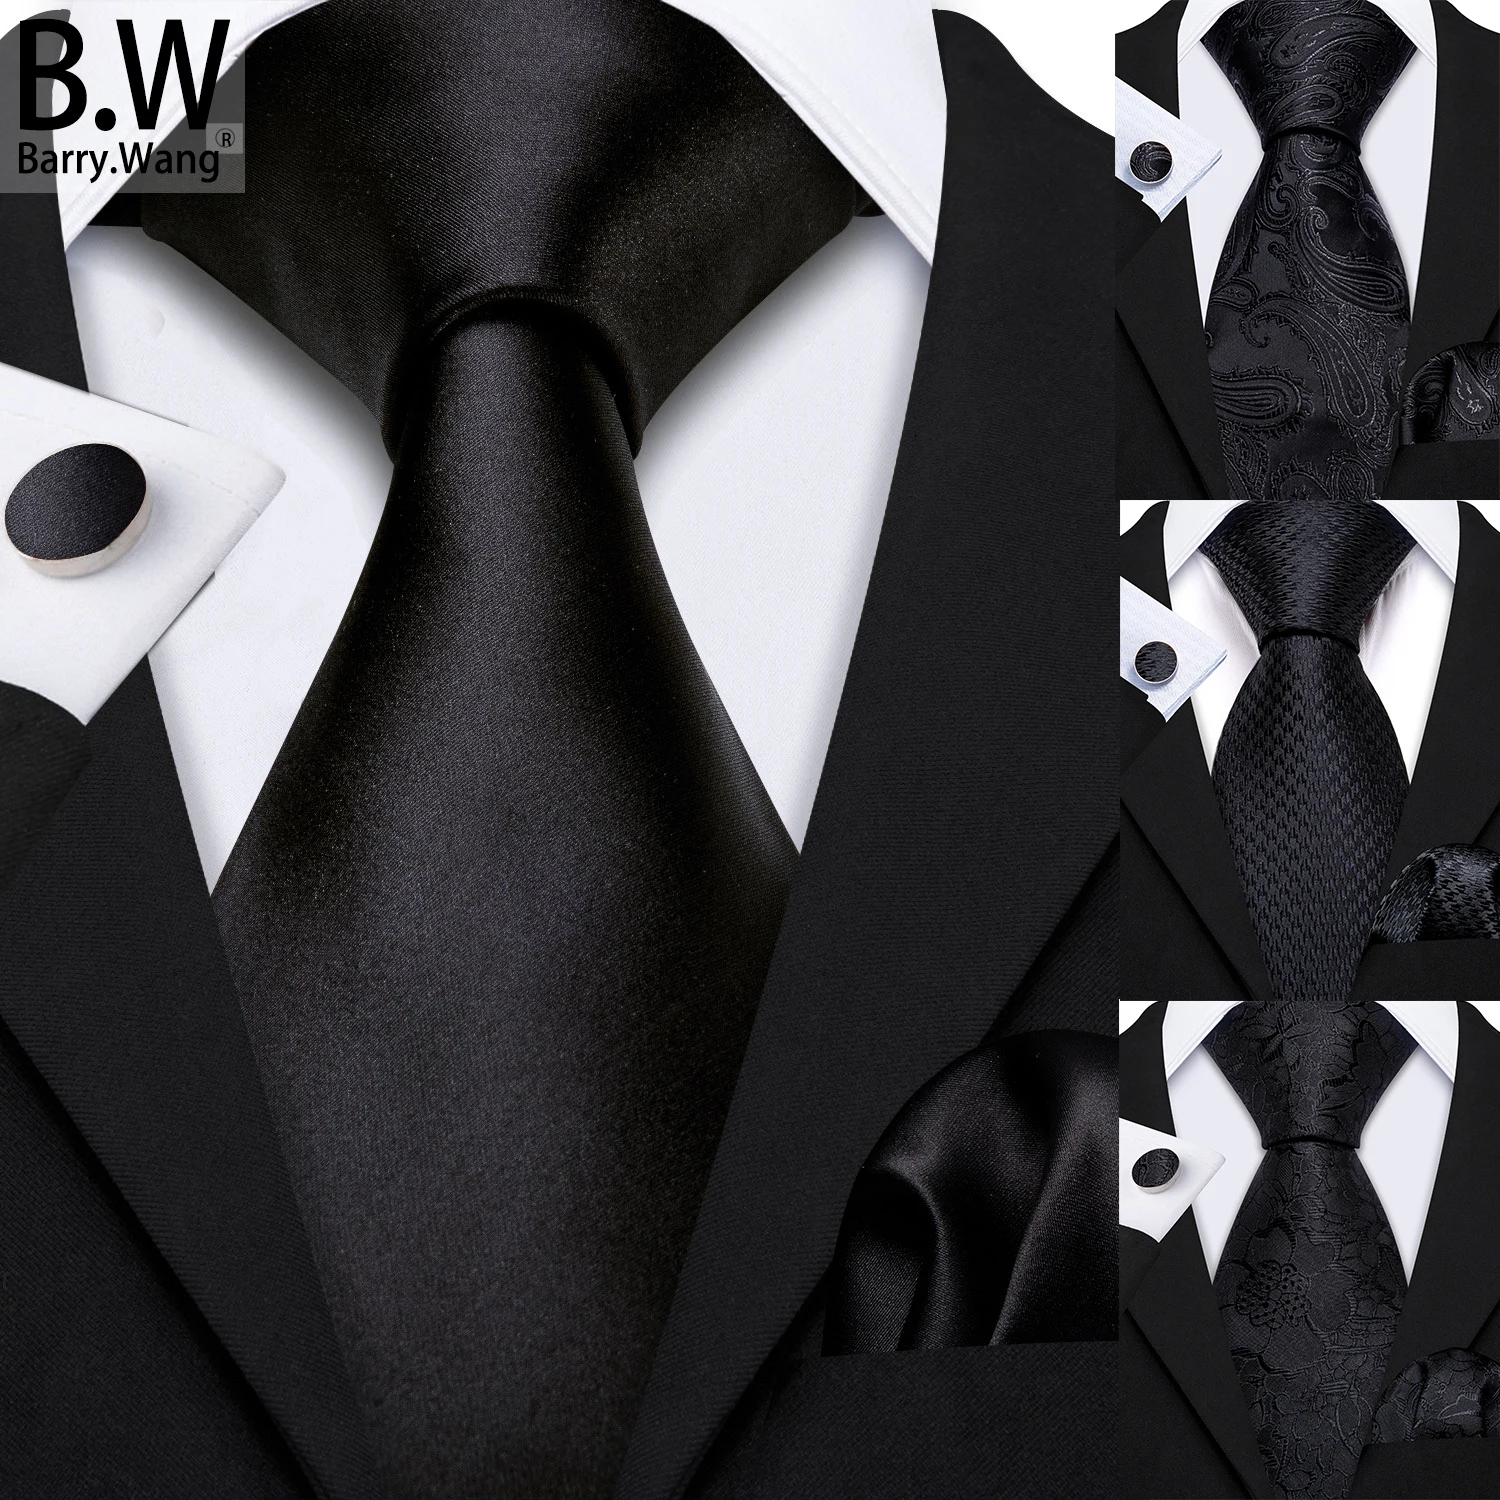 

Barry.Wang Black Silk Men Tie Handkerchief Cufflinks Set Jacquard Solid Paisley Floral Gravat Necktie For Male Wedding Business